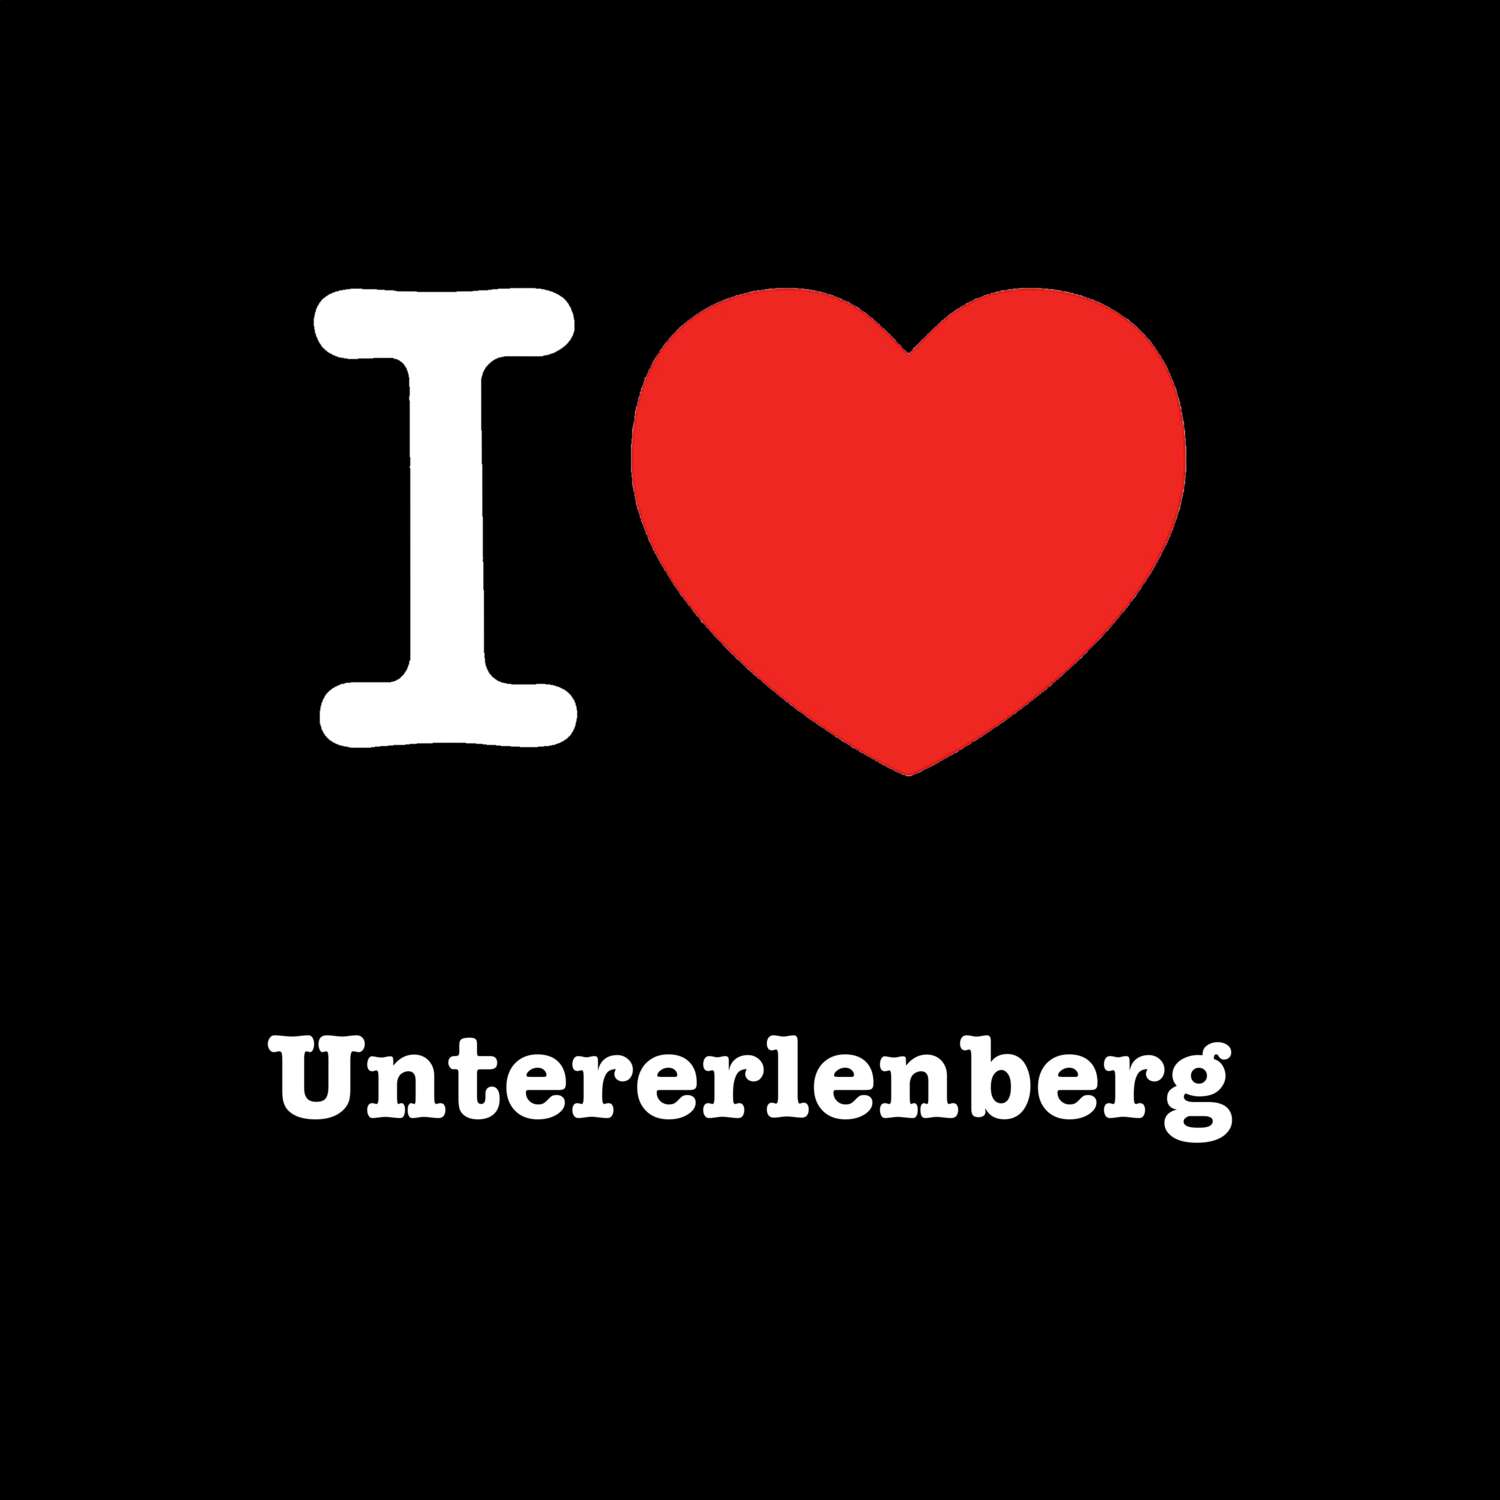 Untererlenberg T-Shirt »I love«